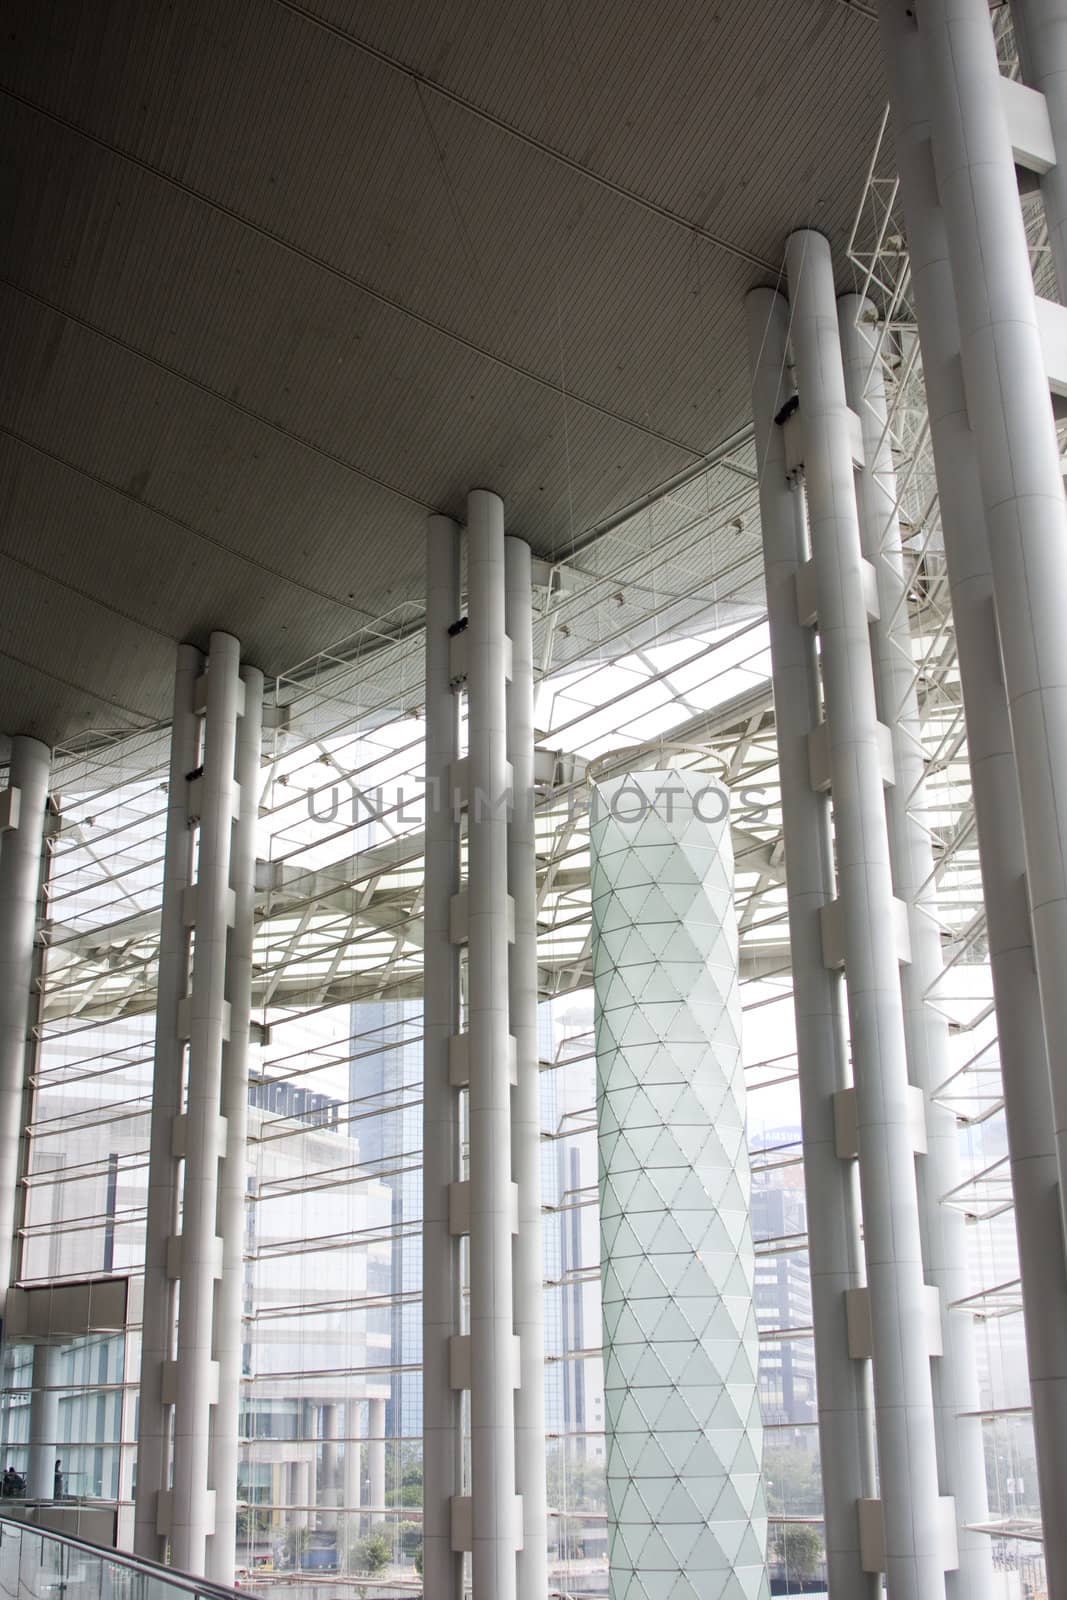 It is a detail of Hong Kong modern building